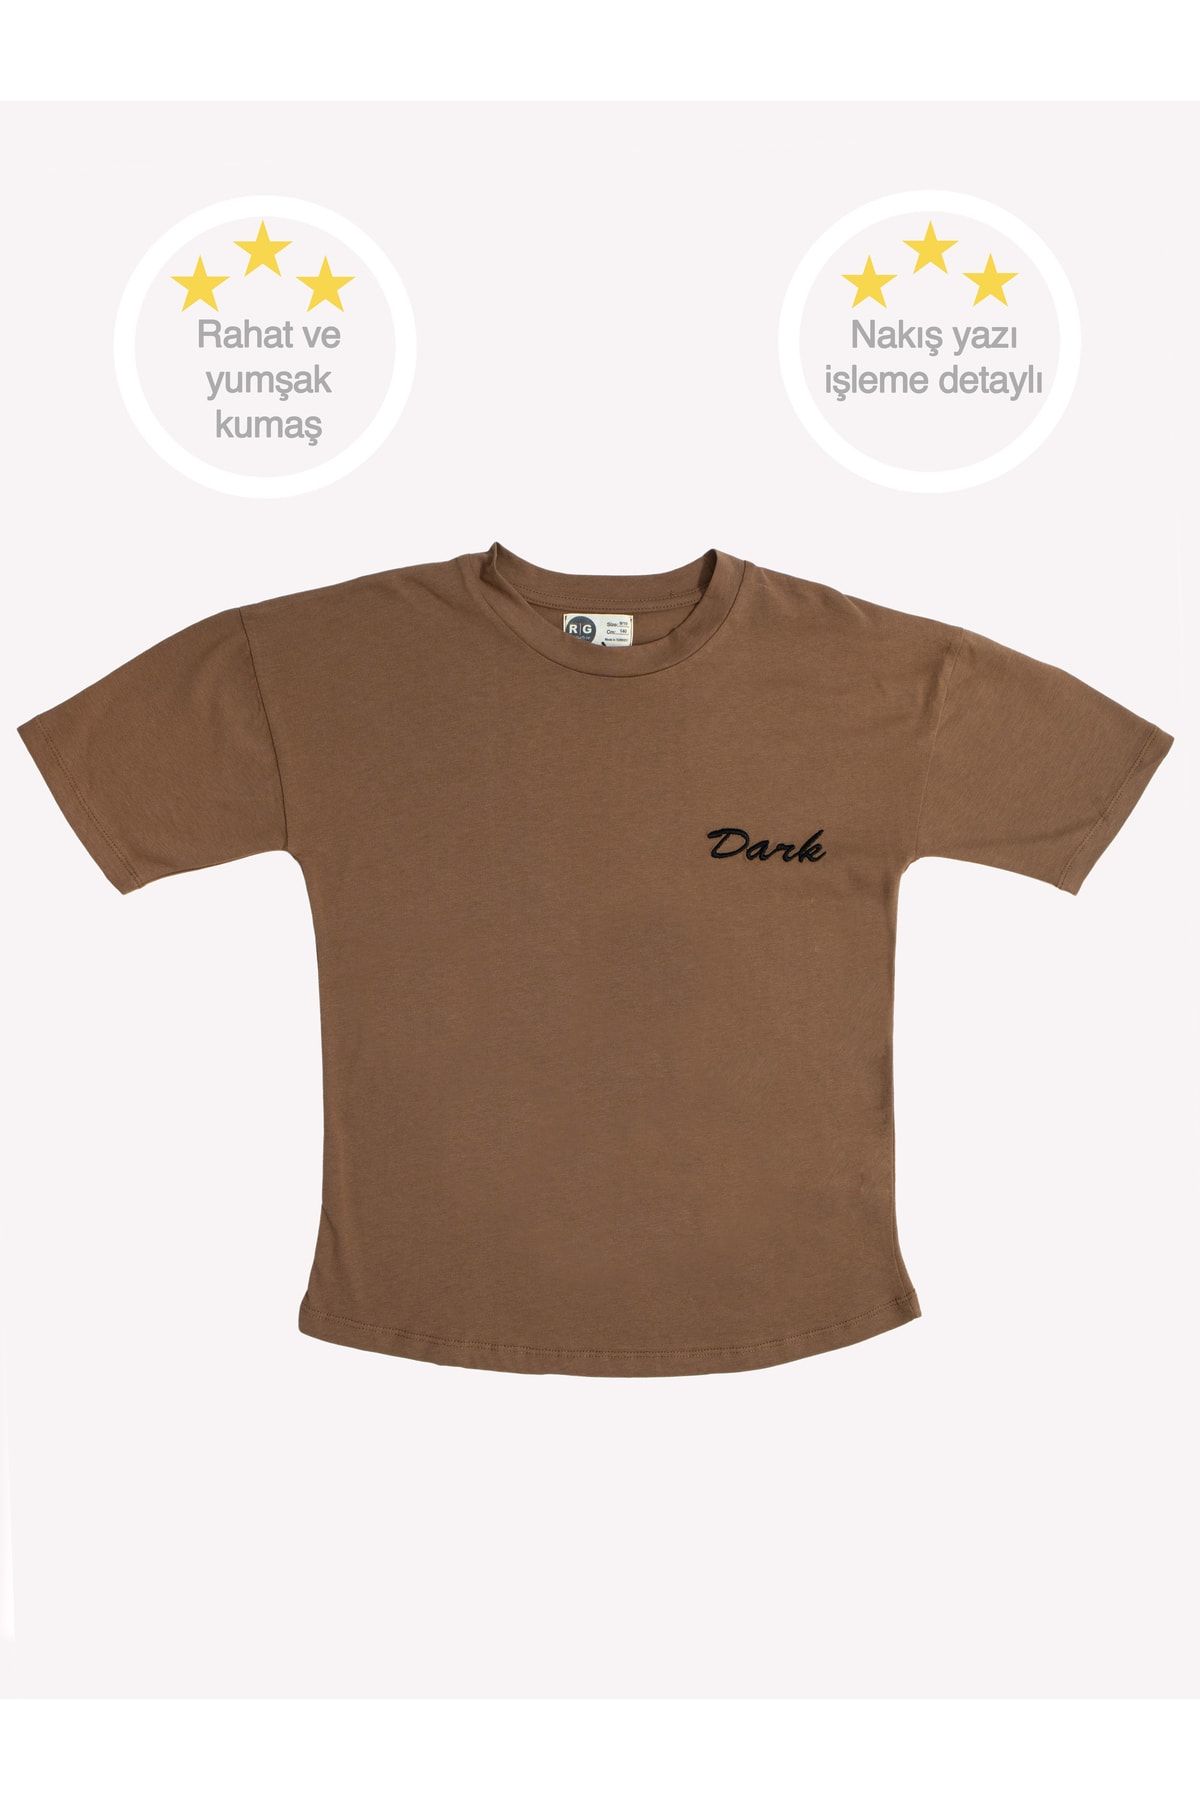 rg kidsstore Unisex Çocuk Genç Pamuklu Yazı Işlemeli T-shirt